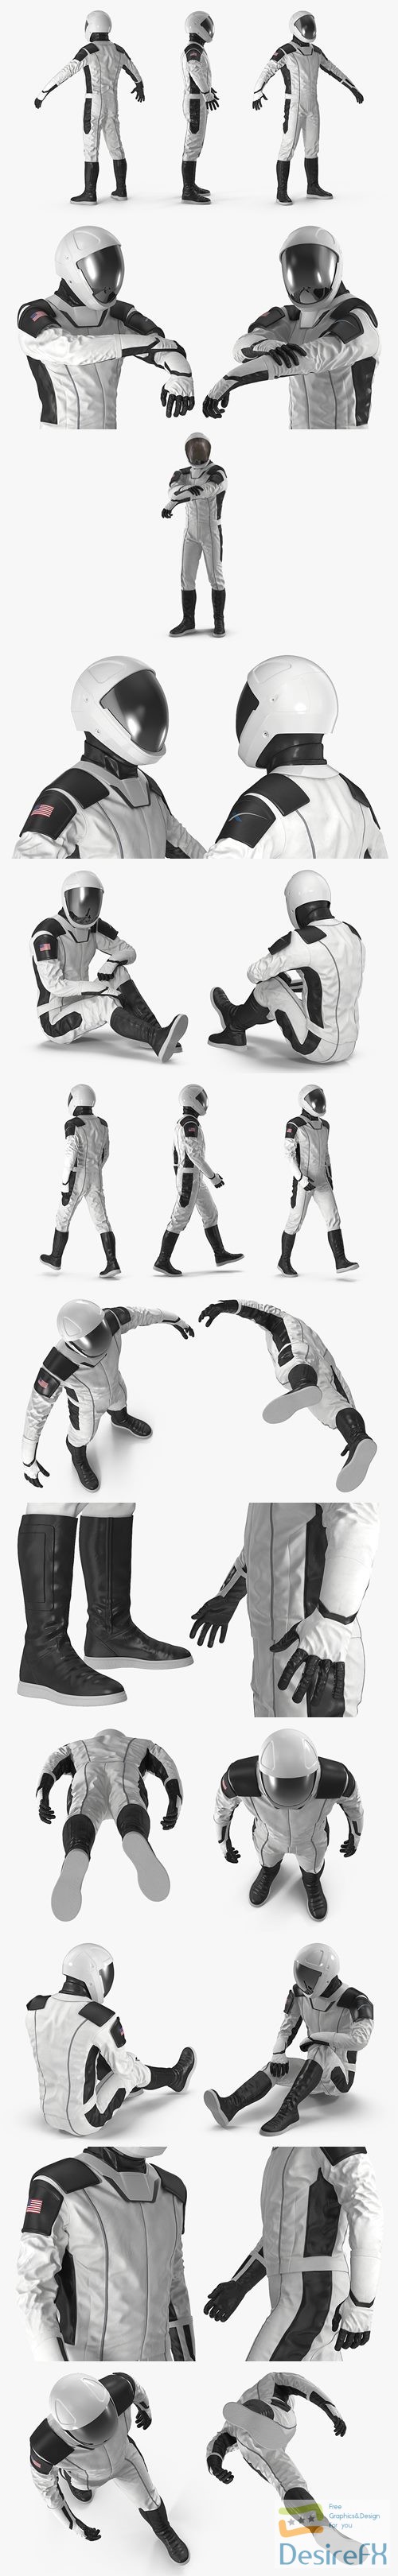 Futuristic Space Suit Rigged 3D Model